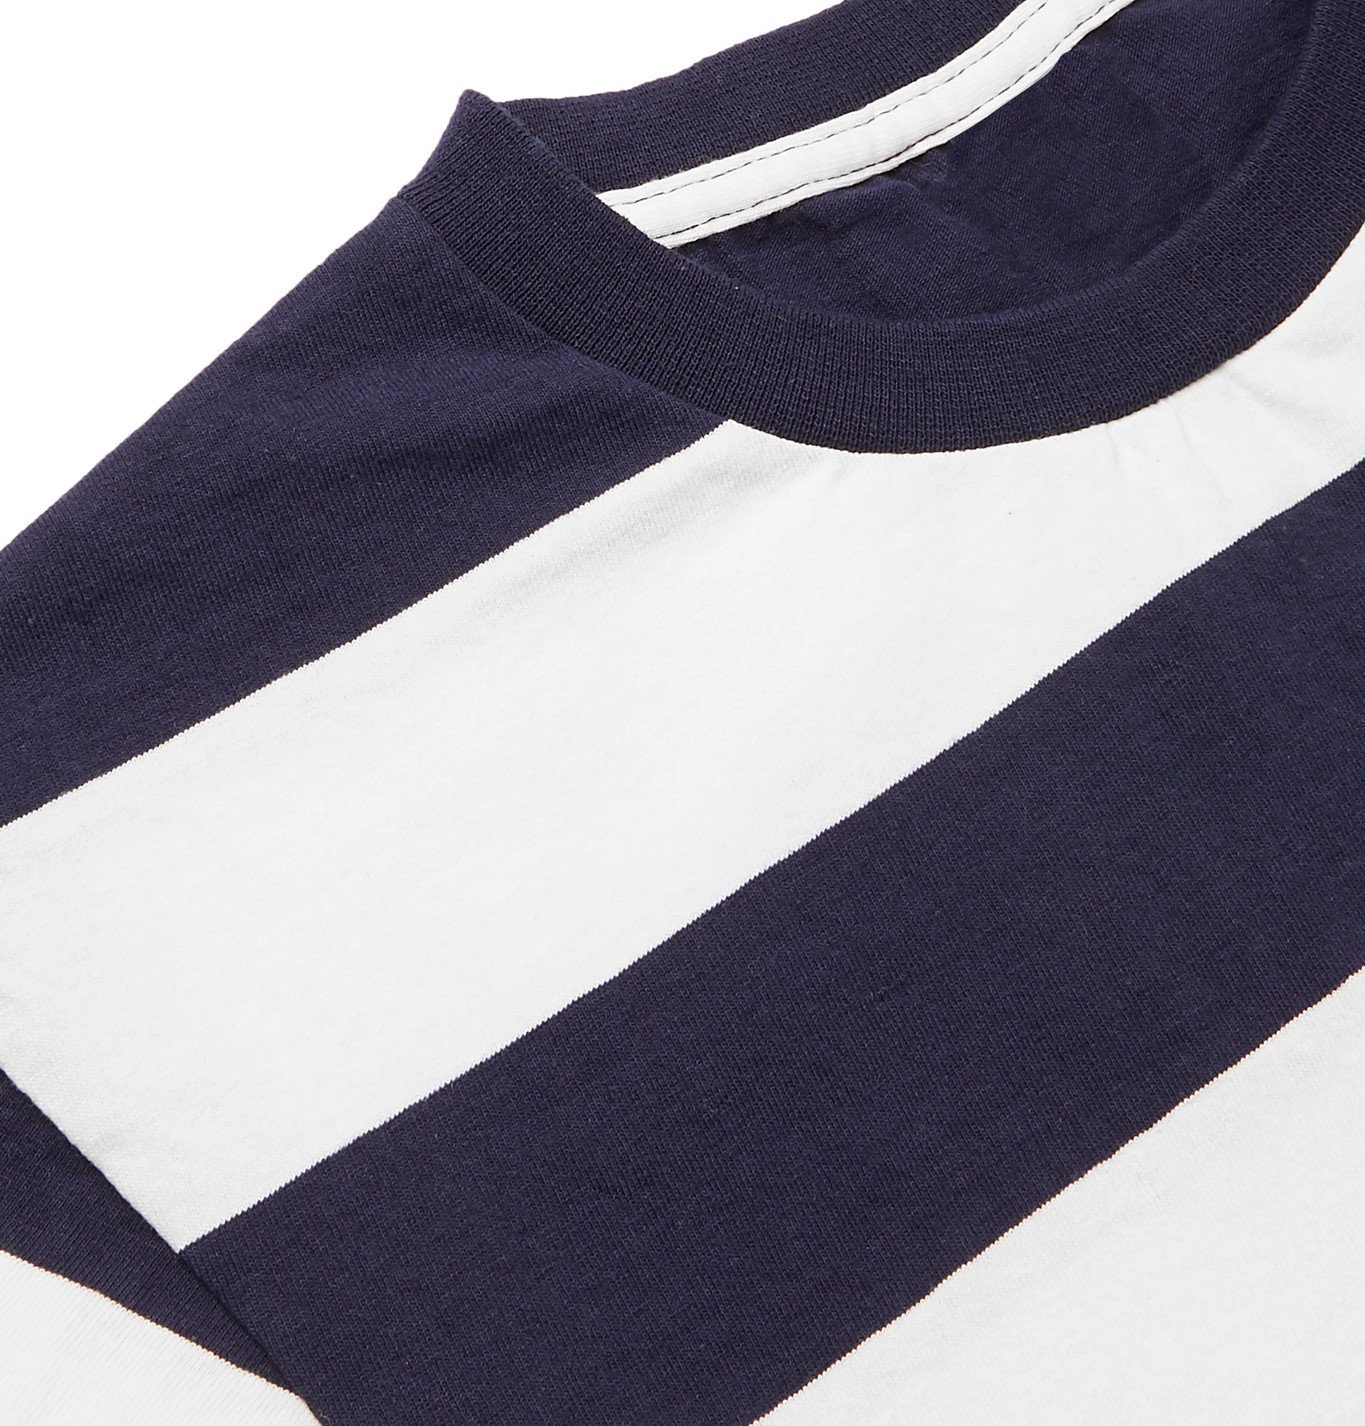 Velva Sheen - Striped Cotton-Jersey T-Shirt - Blue Velva Sheen